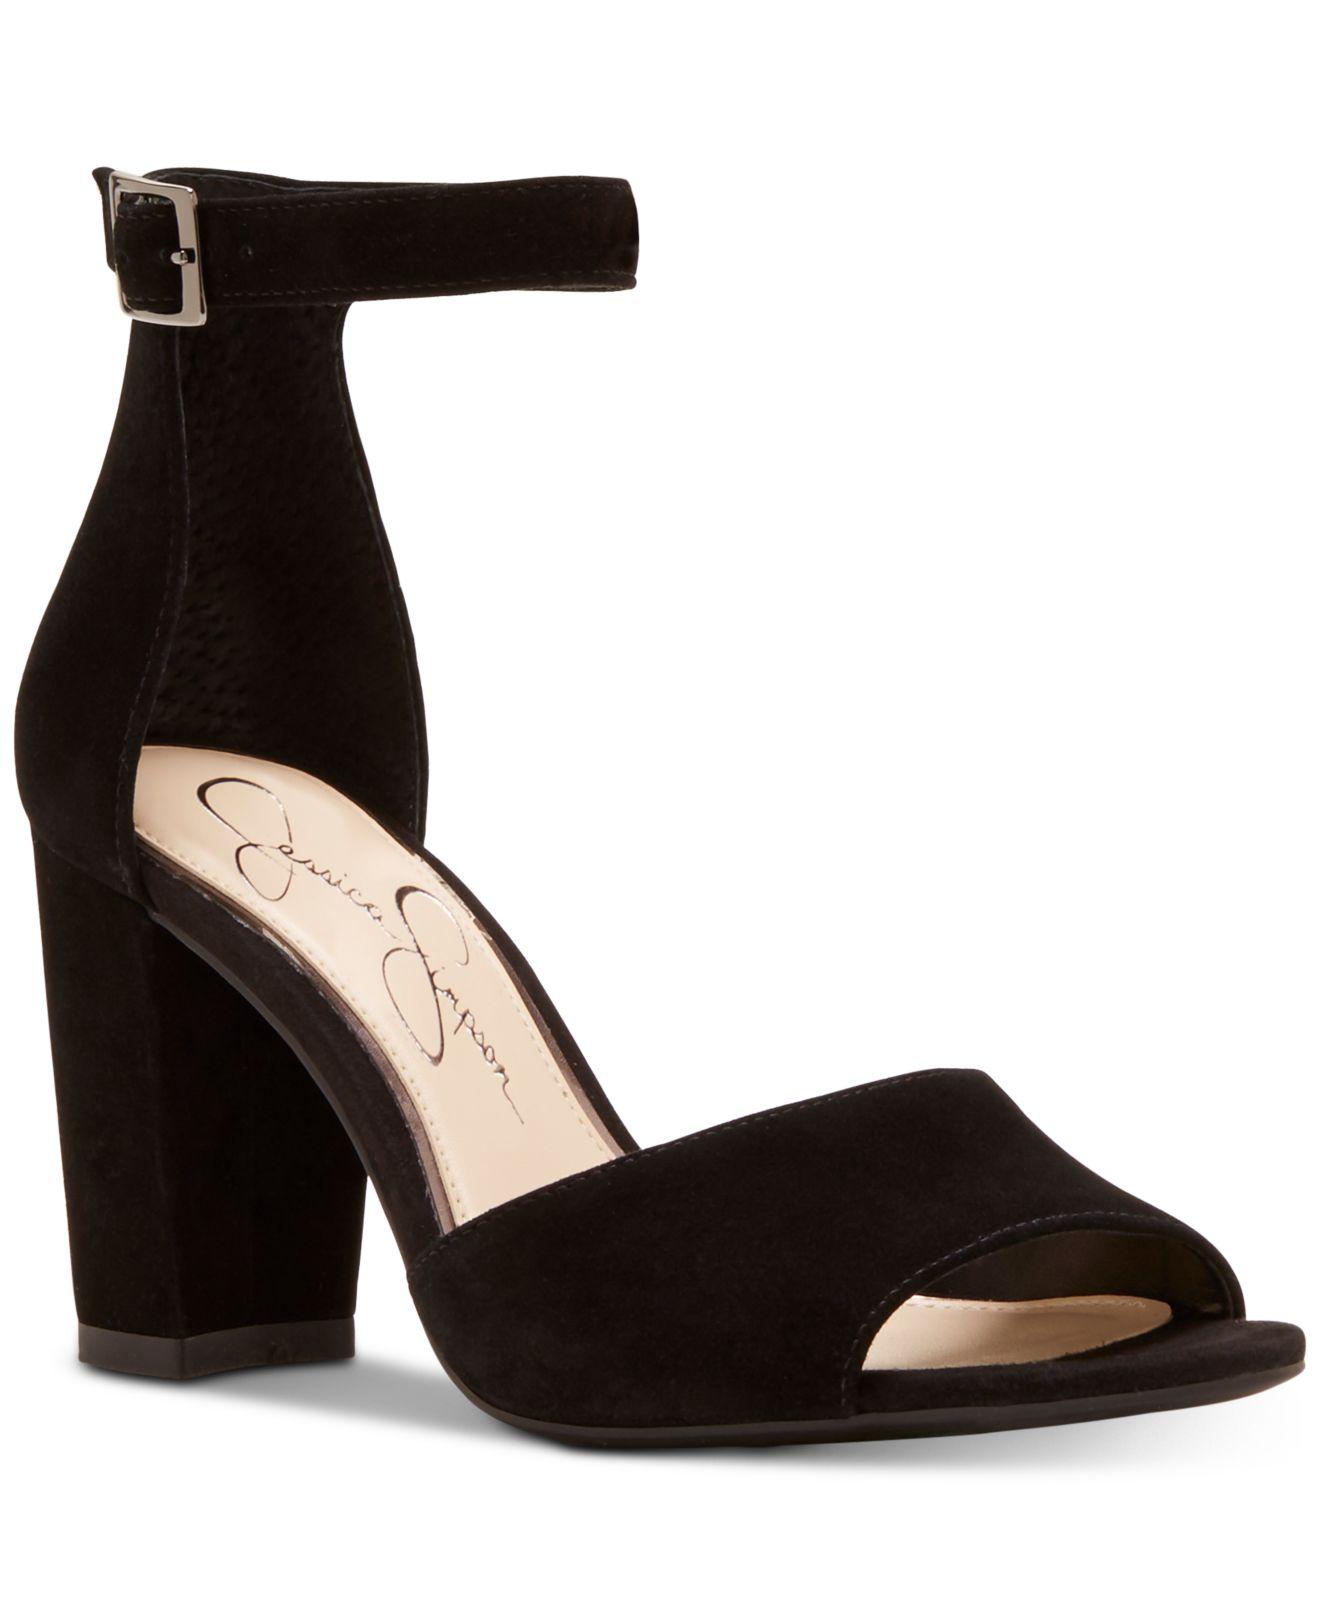 Jessica Simpson Sherron Block-heel Sandals in Black - Lyst